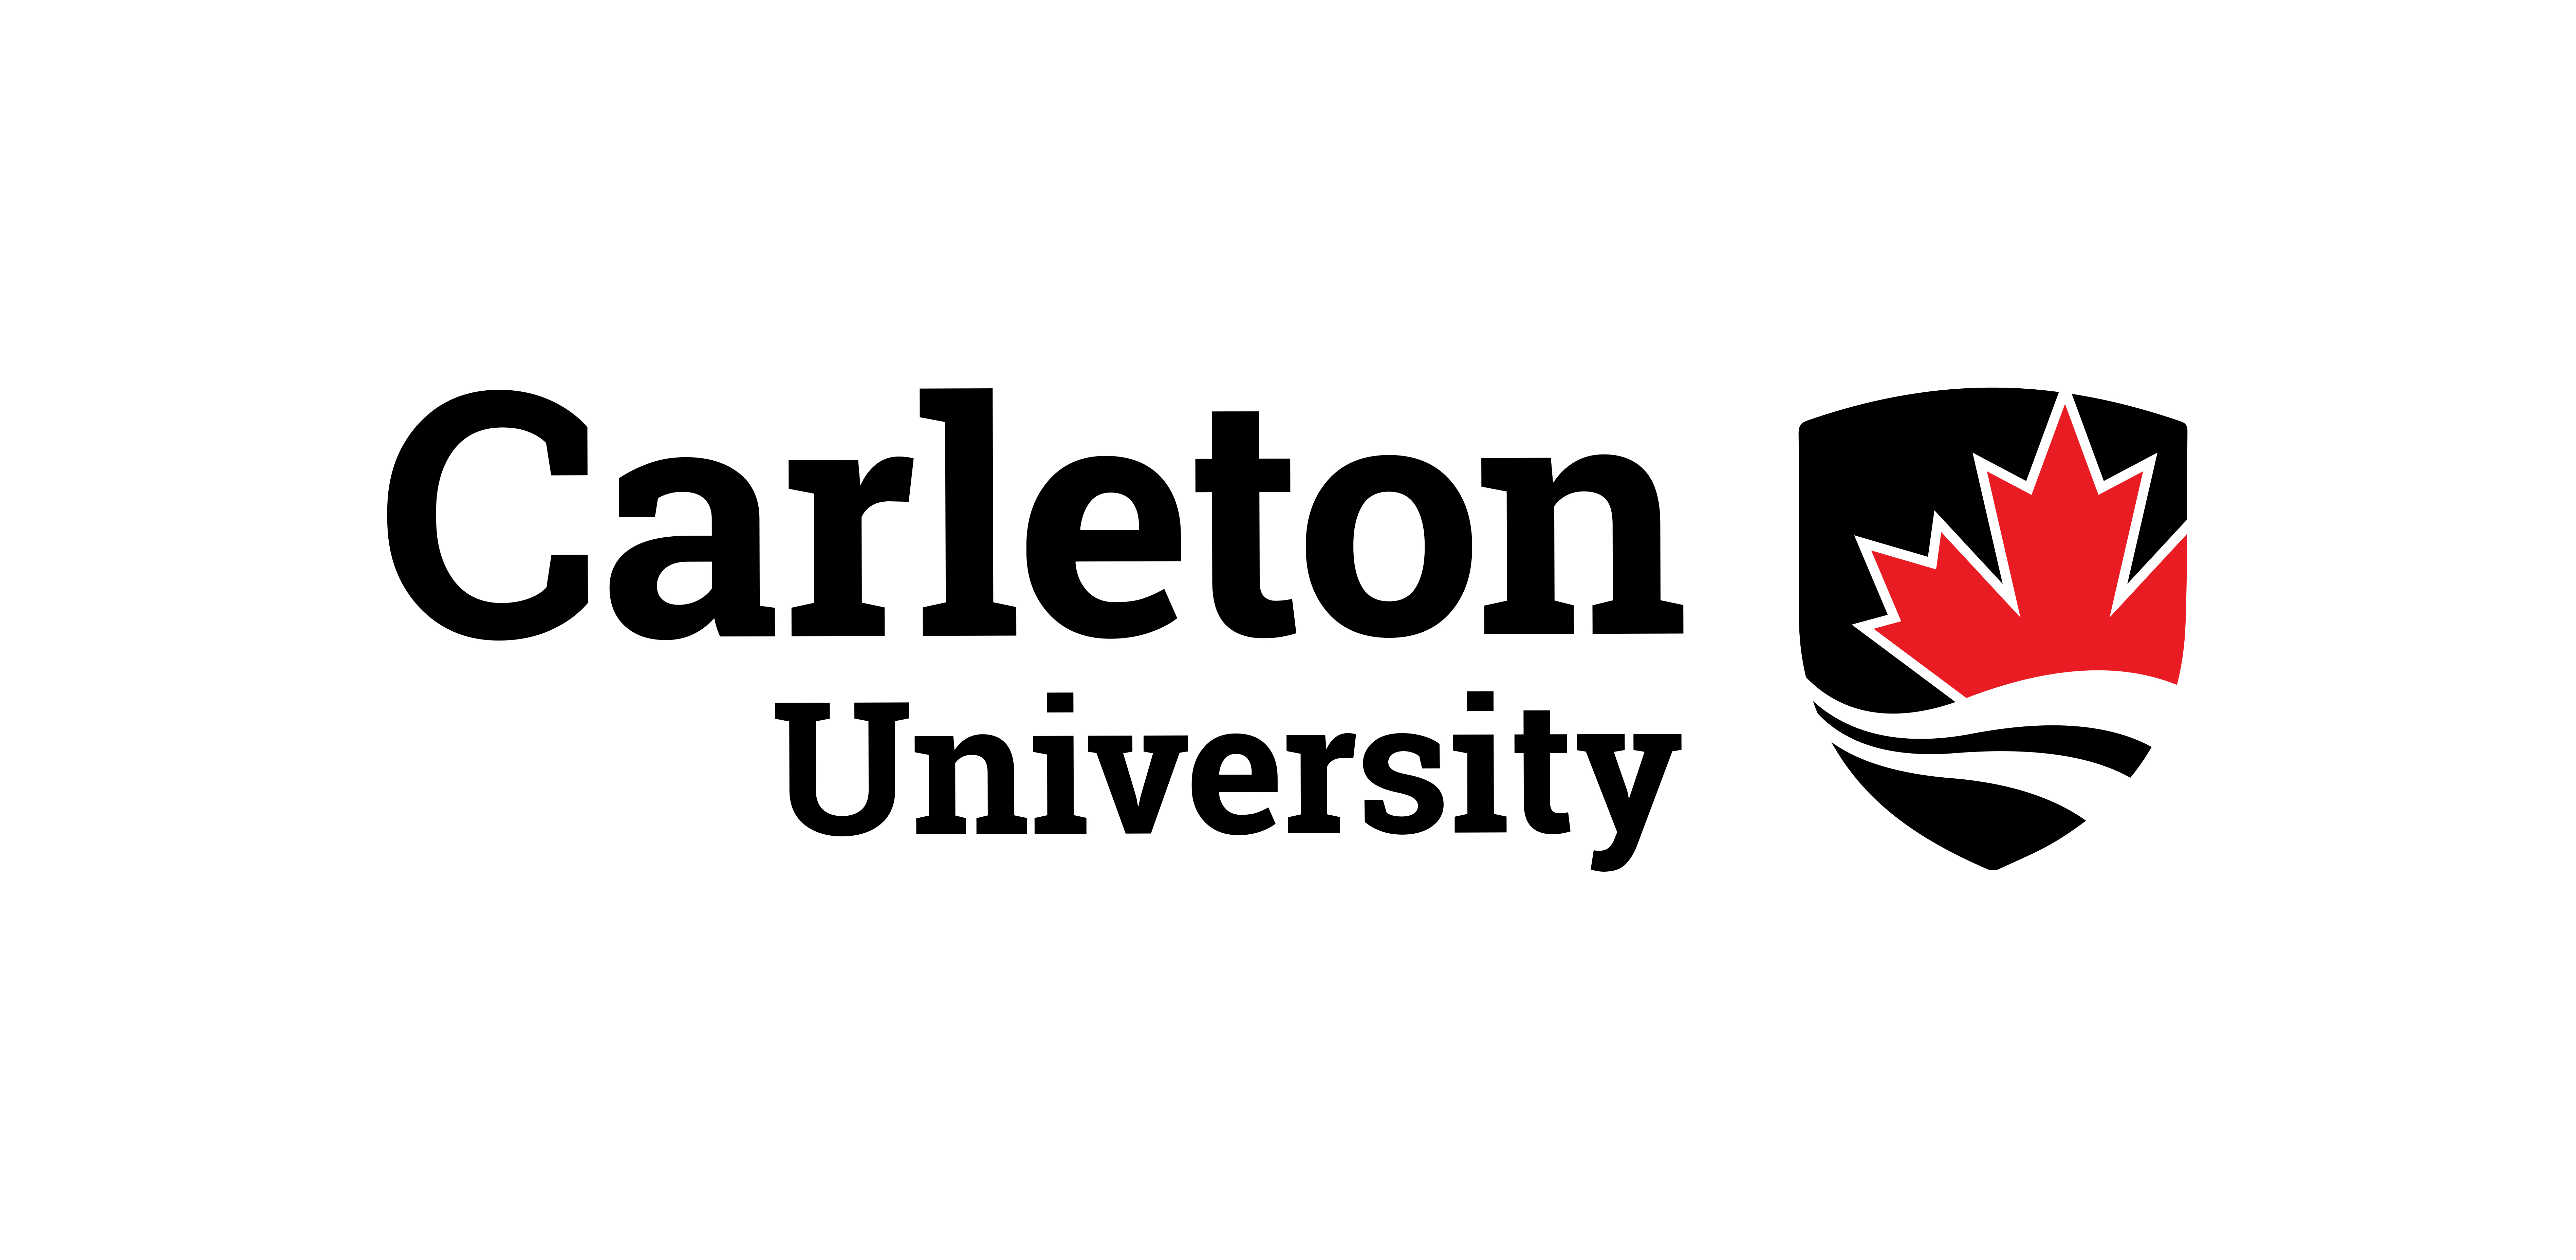 Organization logo of Carleton University